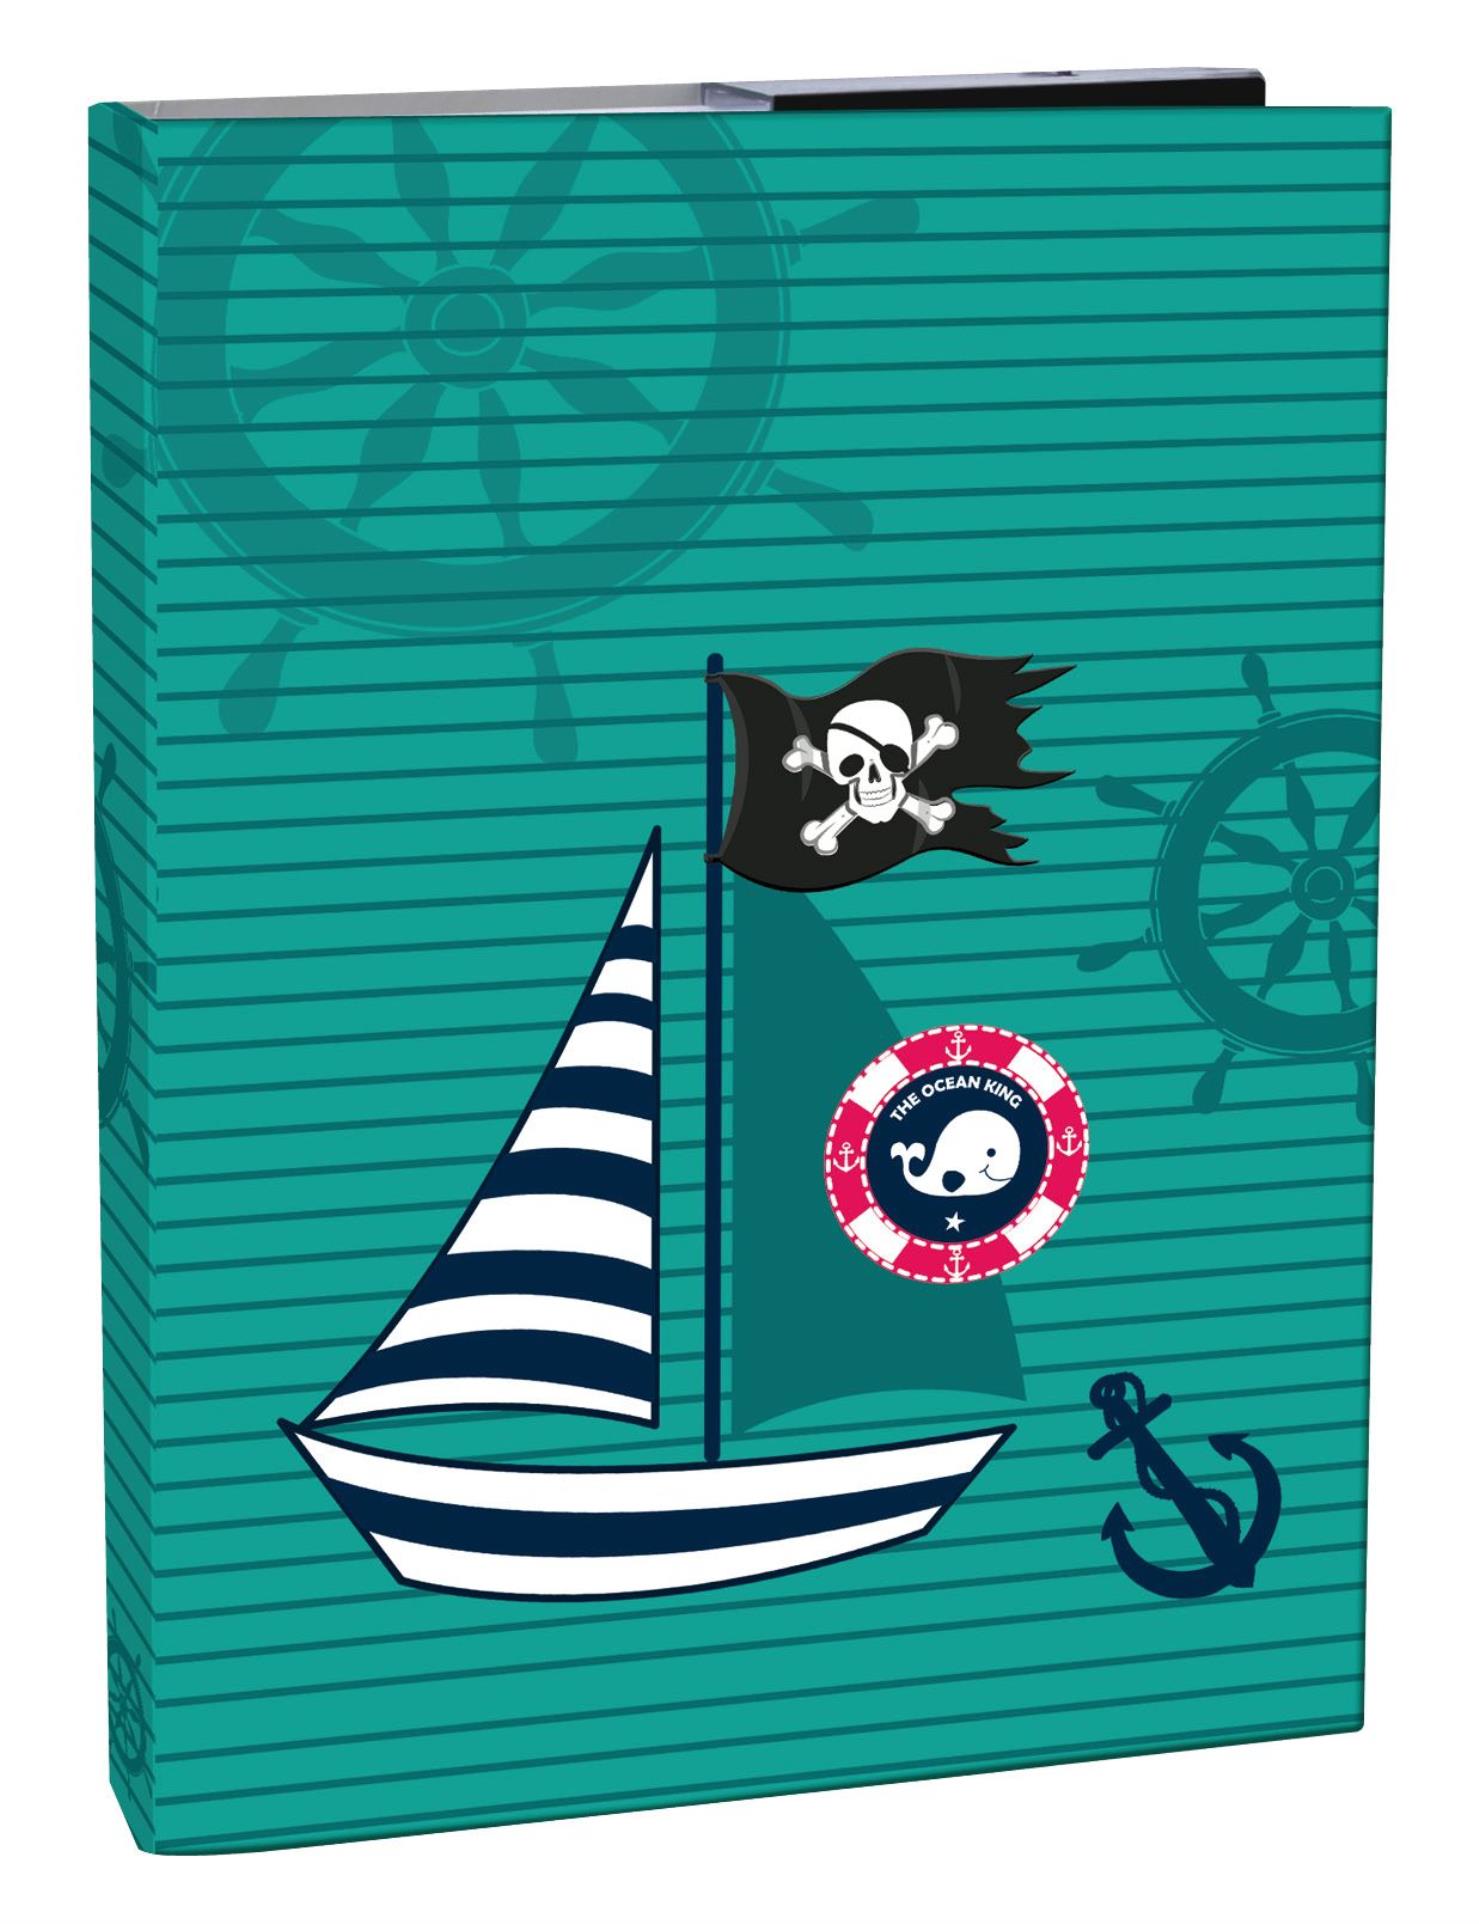 Helma 365 Box na sešity A5 - s gumou, Ocean Pirate